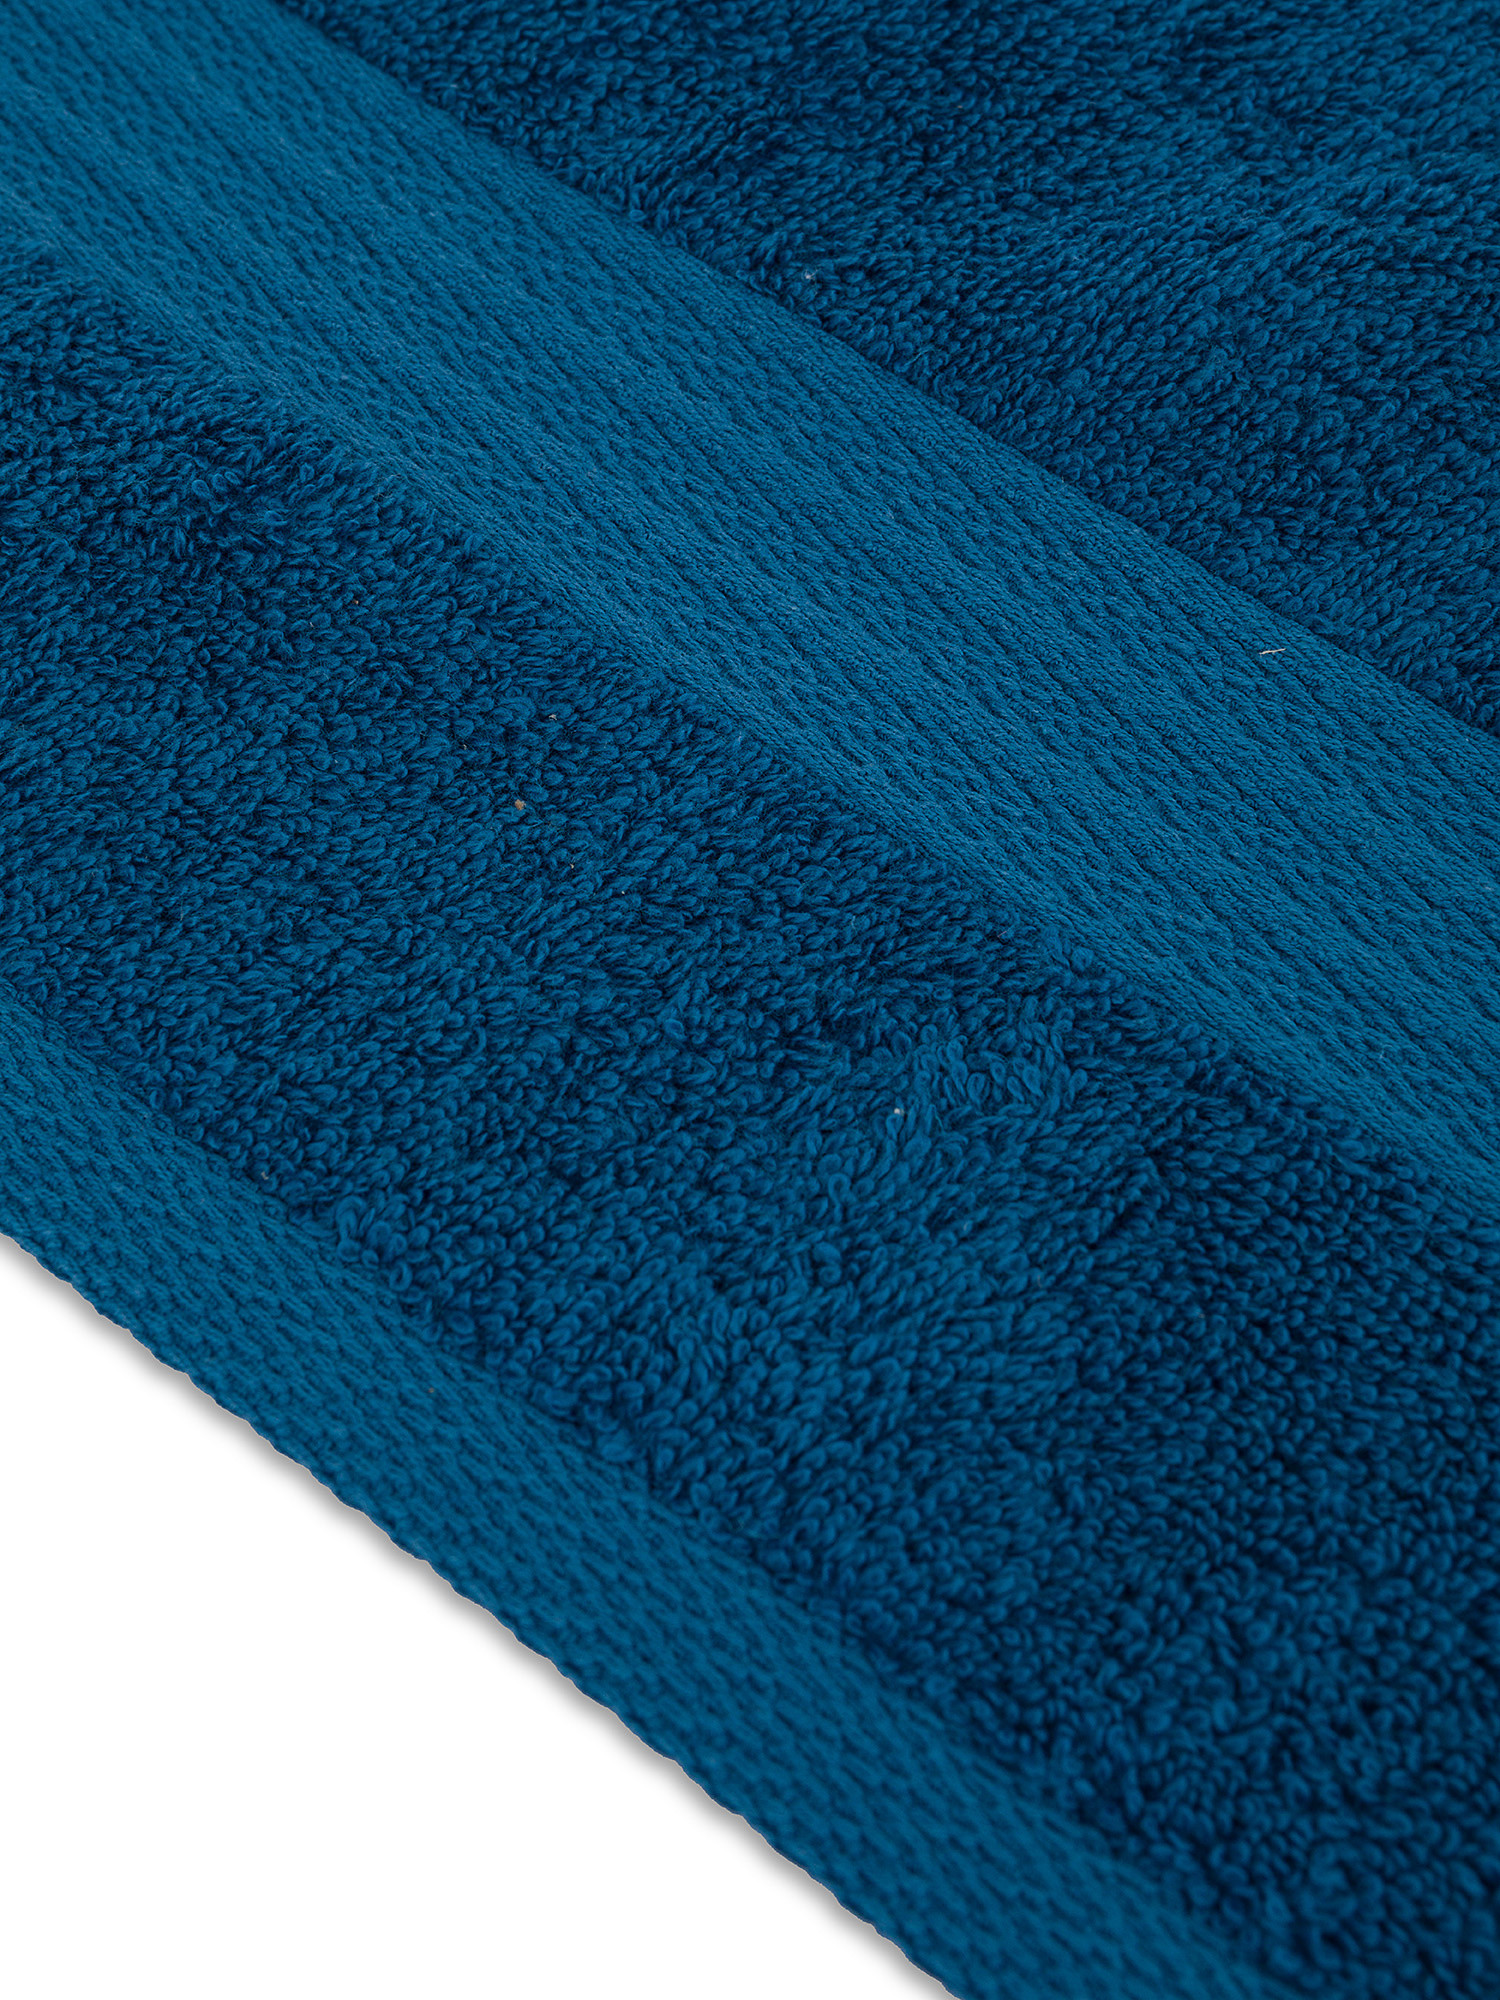 Zefiro solid color 100% cotton towel, Blue, large image number 2